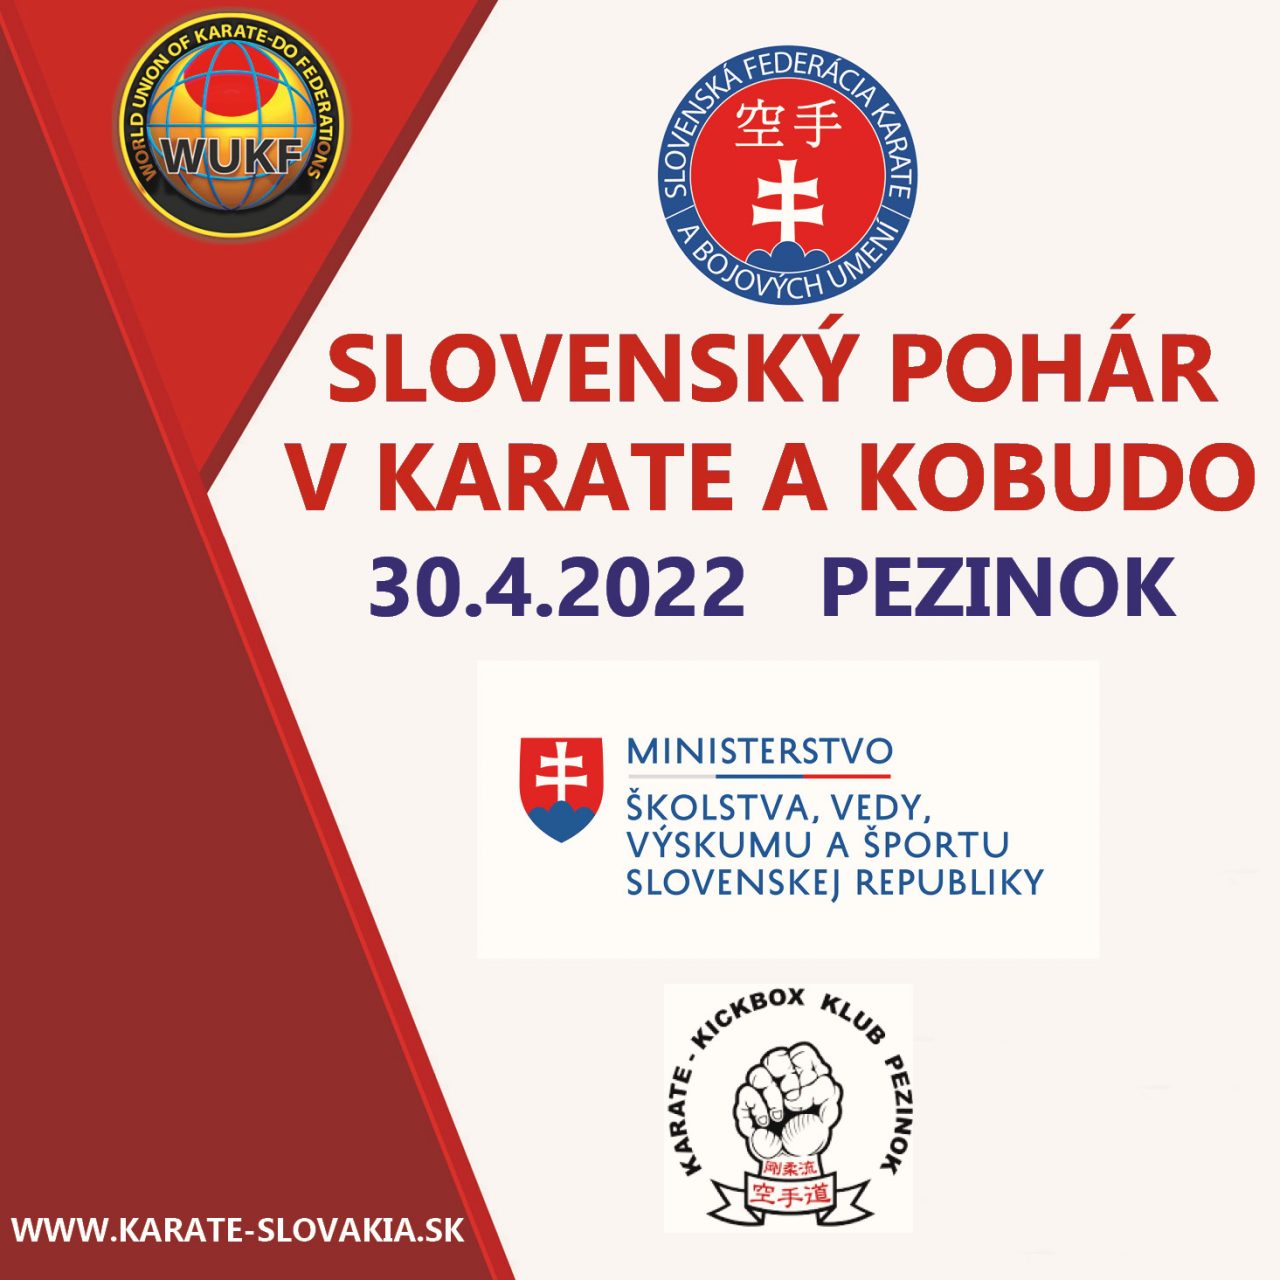 https://karate-slovakia.sk/wp-content/uploads/fb_prispevok-1280x1280.jpg